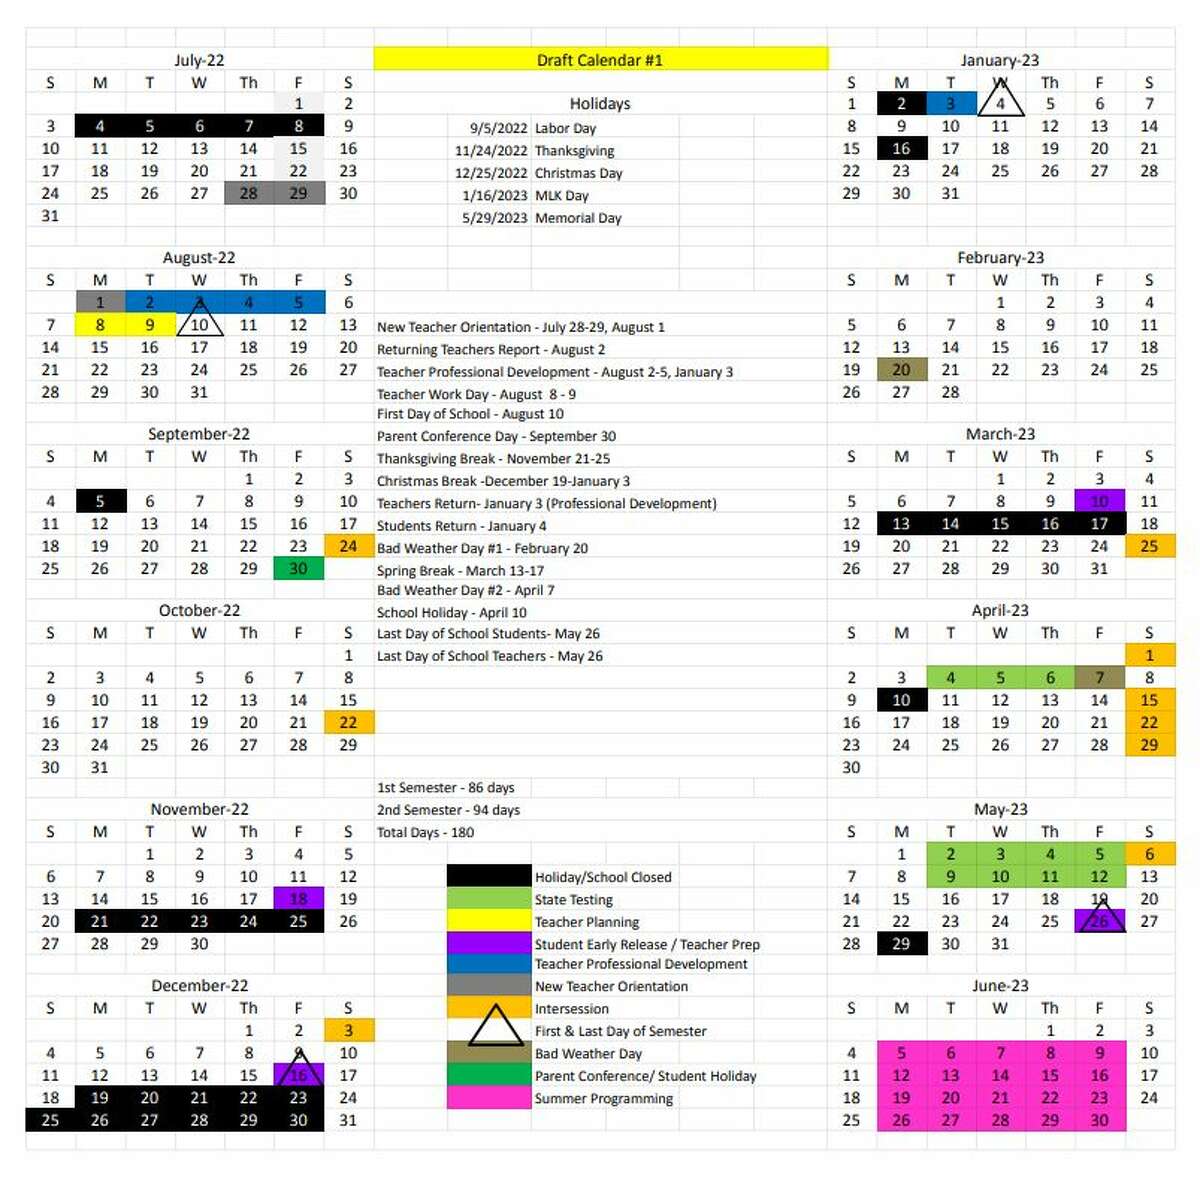 Midland ISD school calendar draft 1.